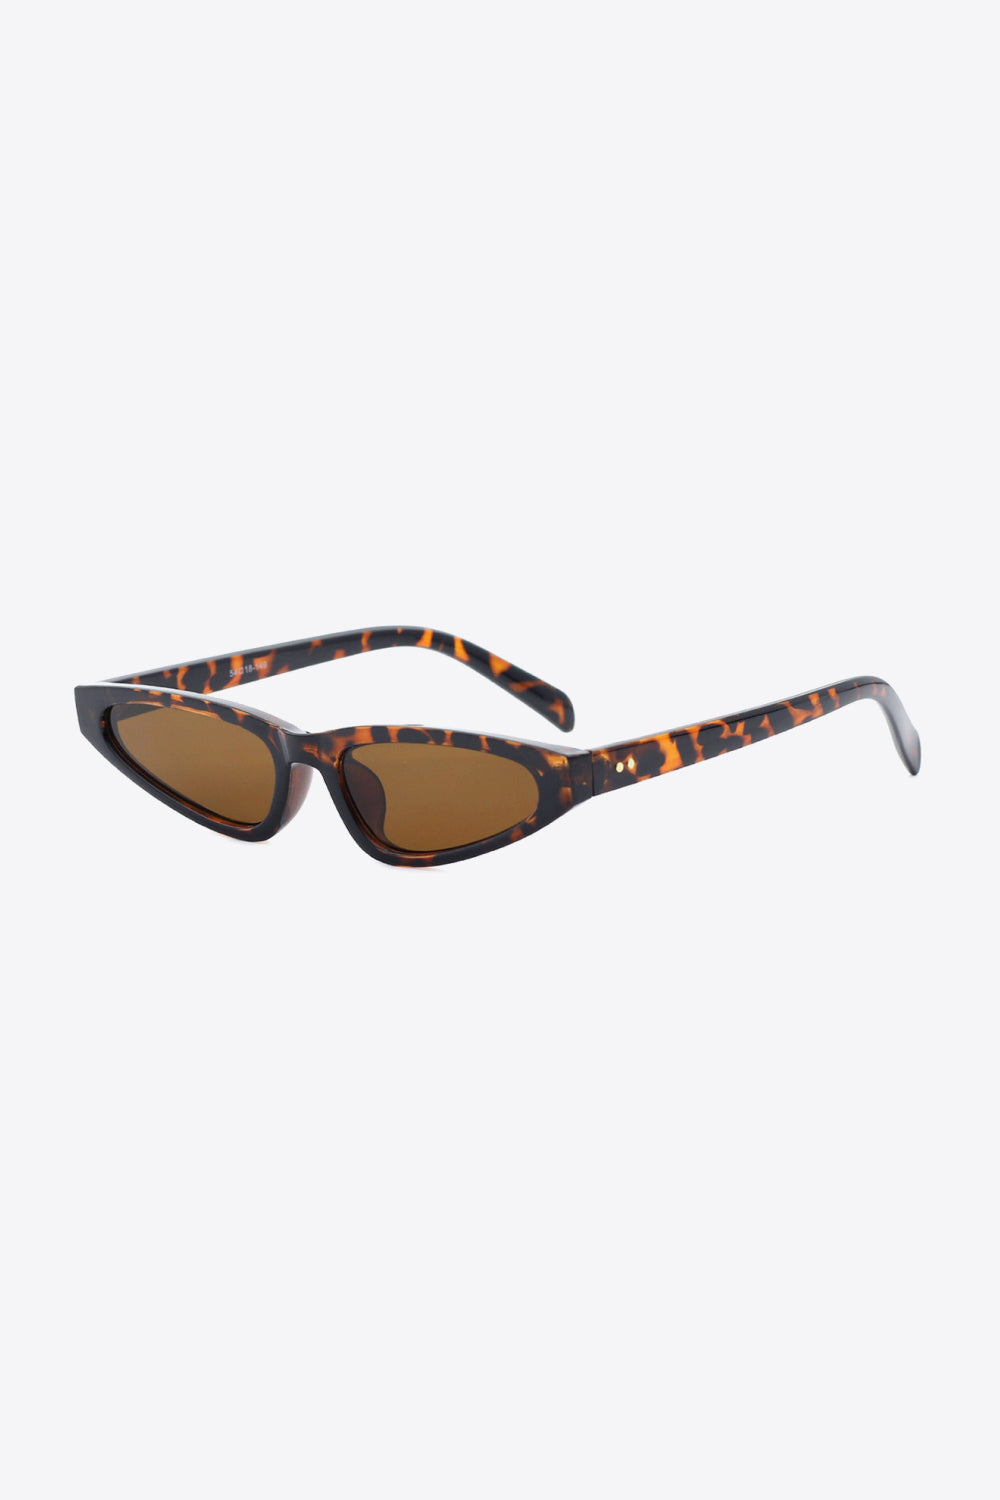 Polycarbonate Frame UV400 Cat Eye Sunglasses - Caramel / One Size Wynter 4 All Seasons